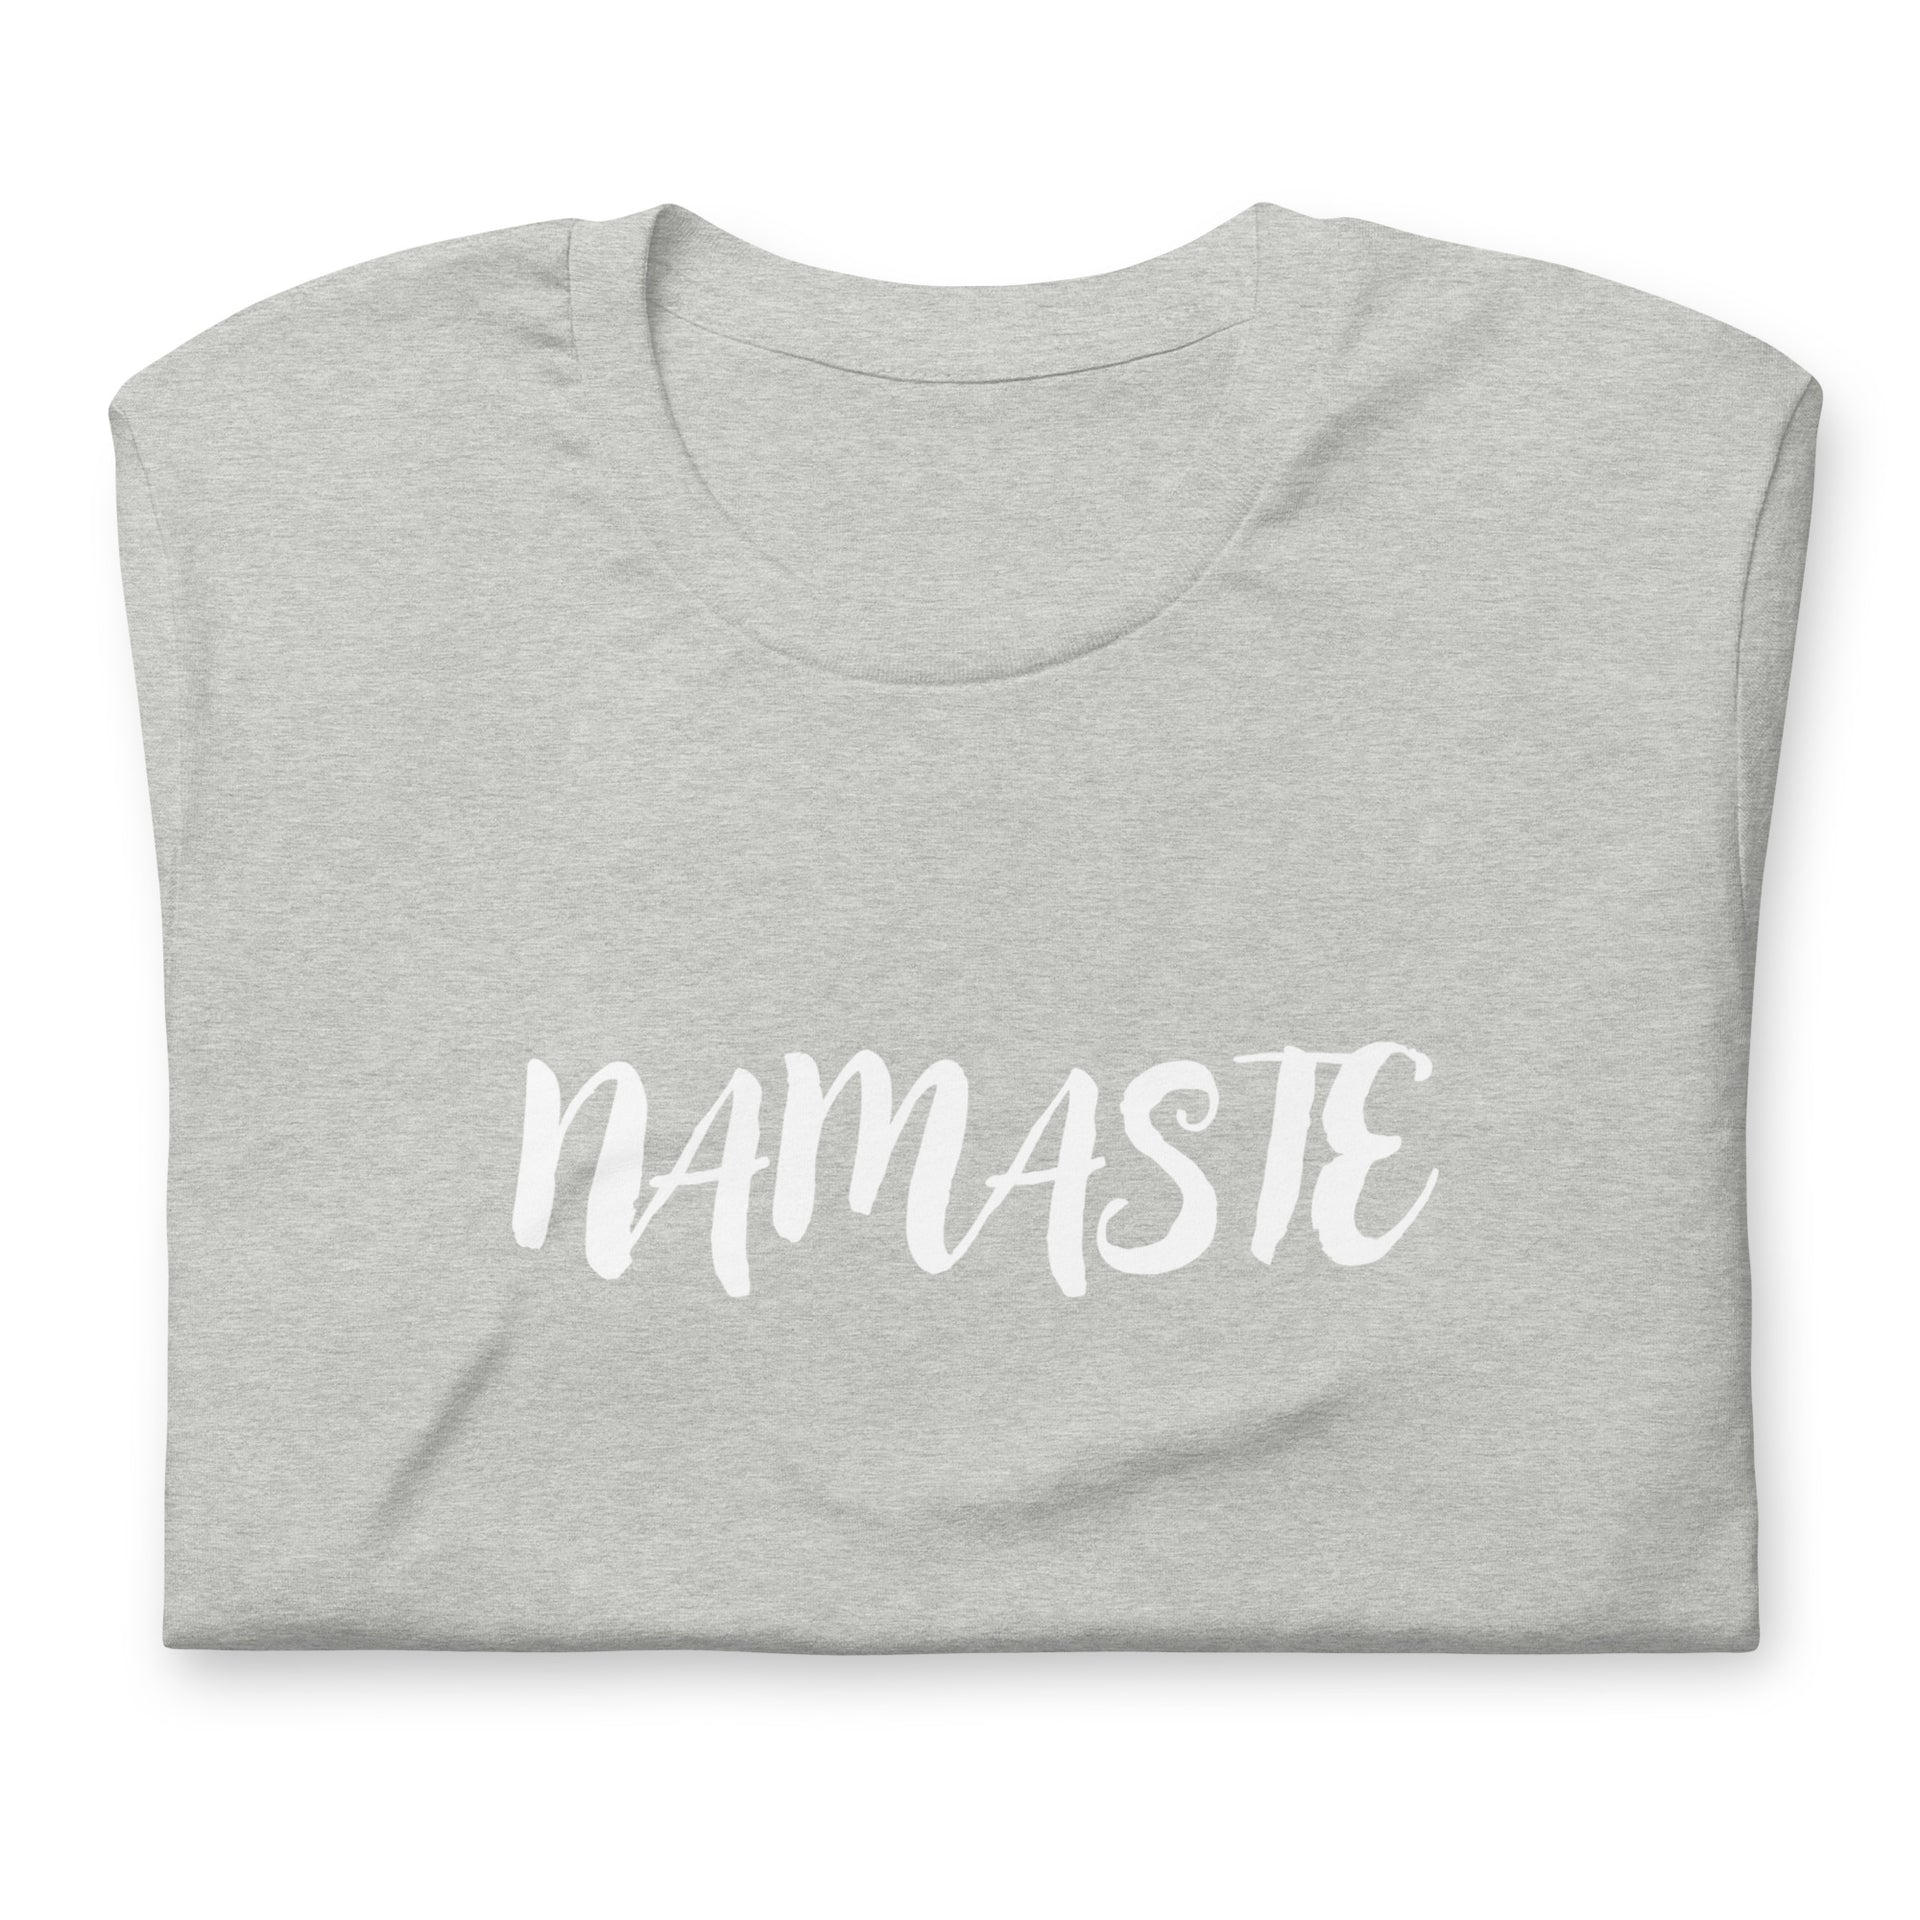 shirt Spirituella Yoga – Namaste